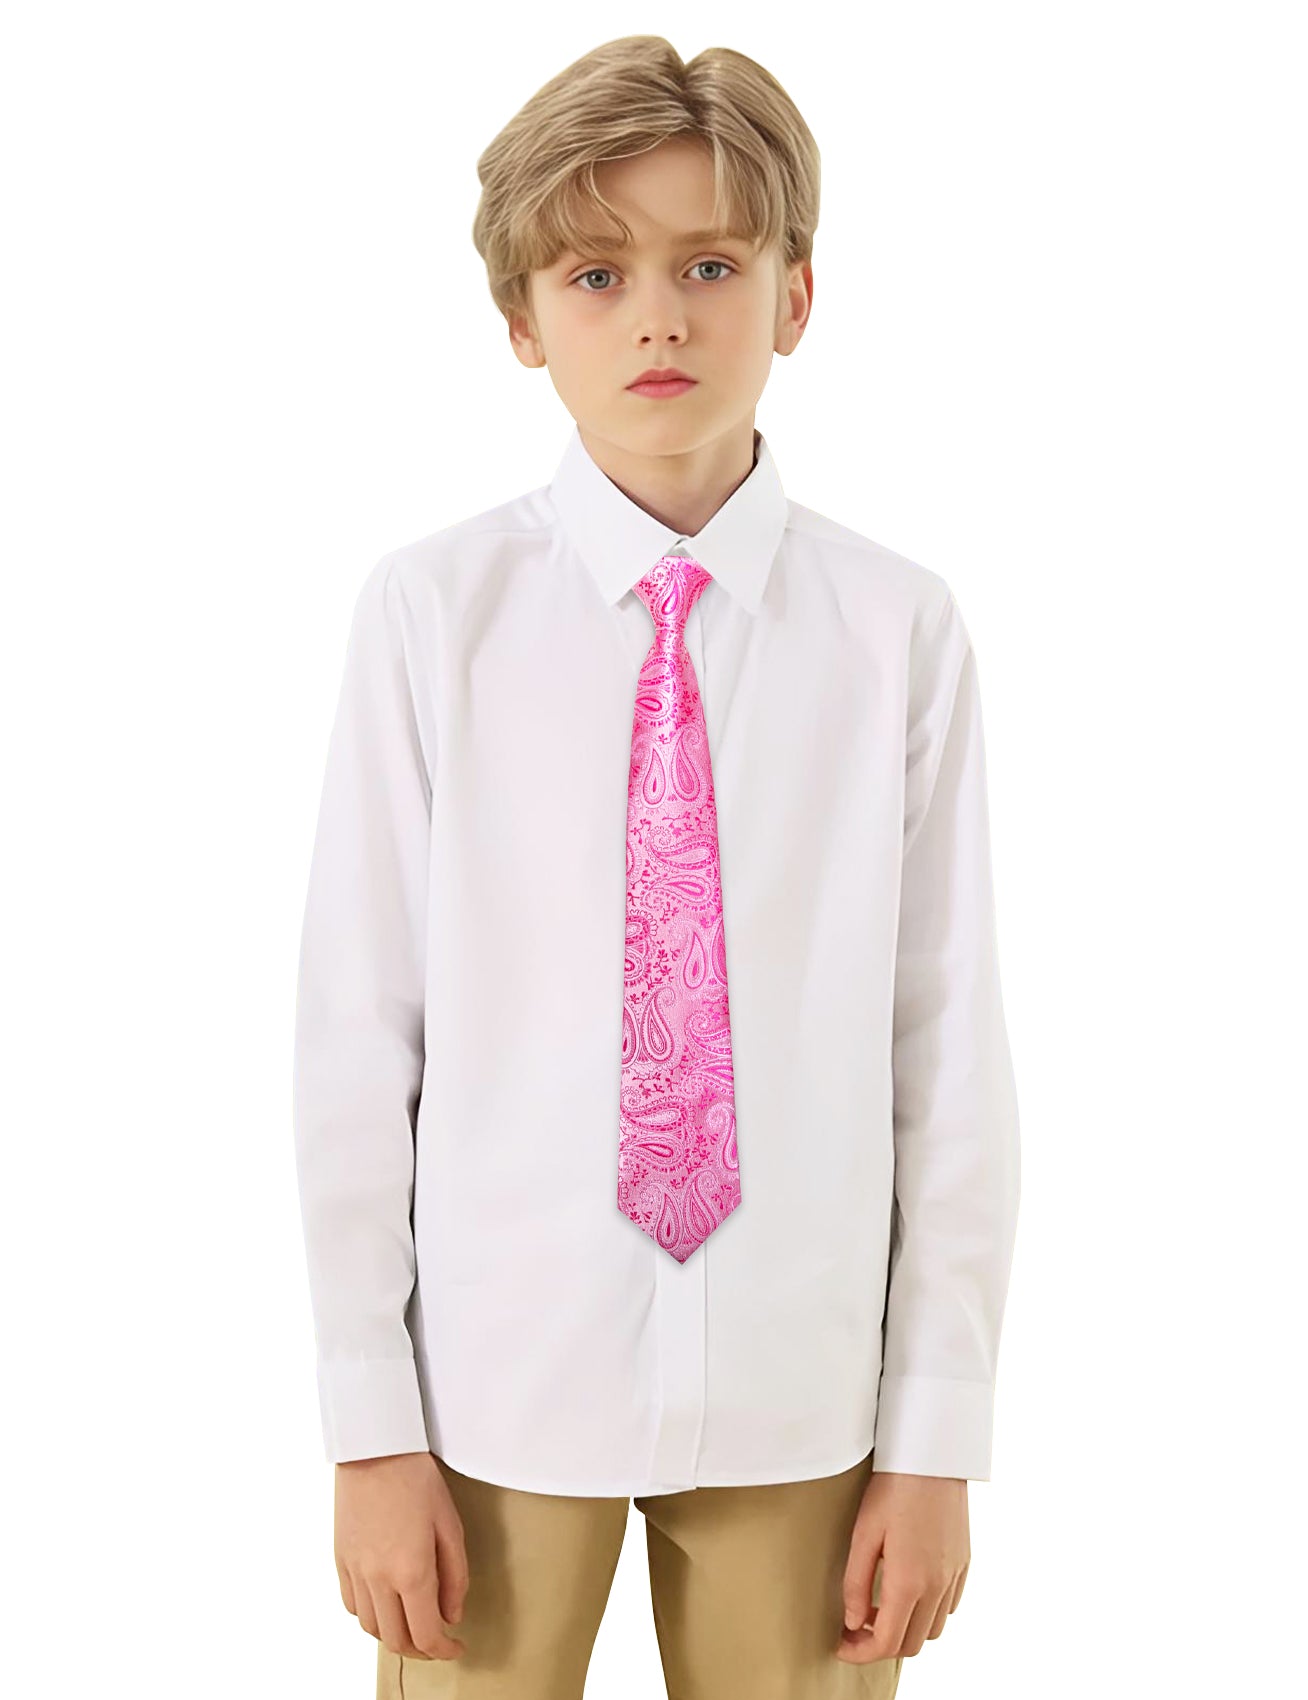 Barry.wang Kid's Tie Hot Pink Jacquard Children Tie Pocket Square Set